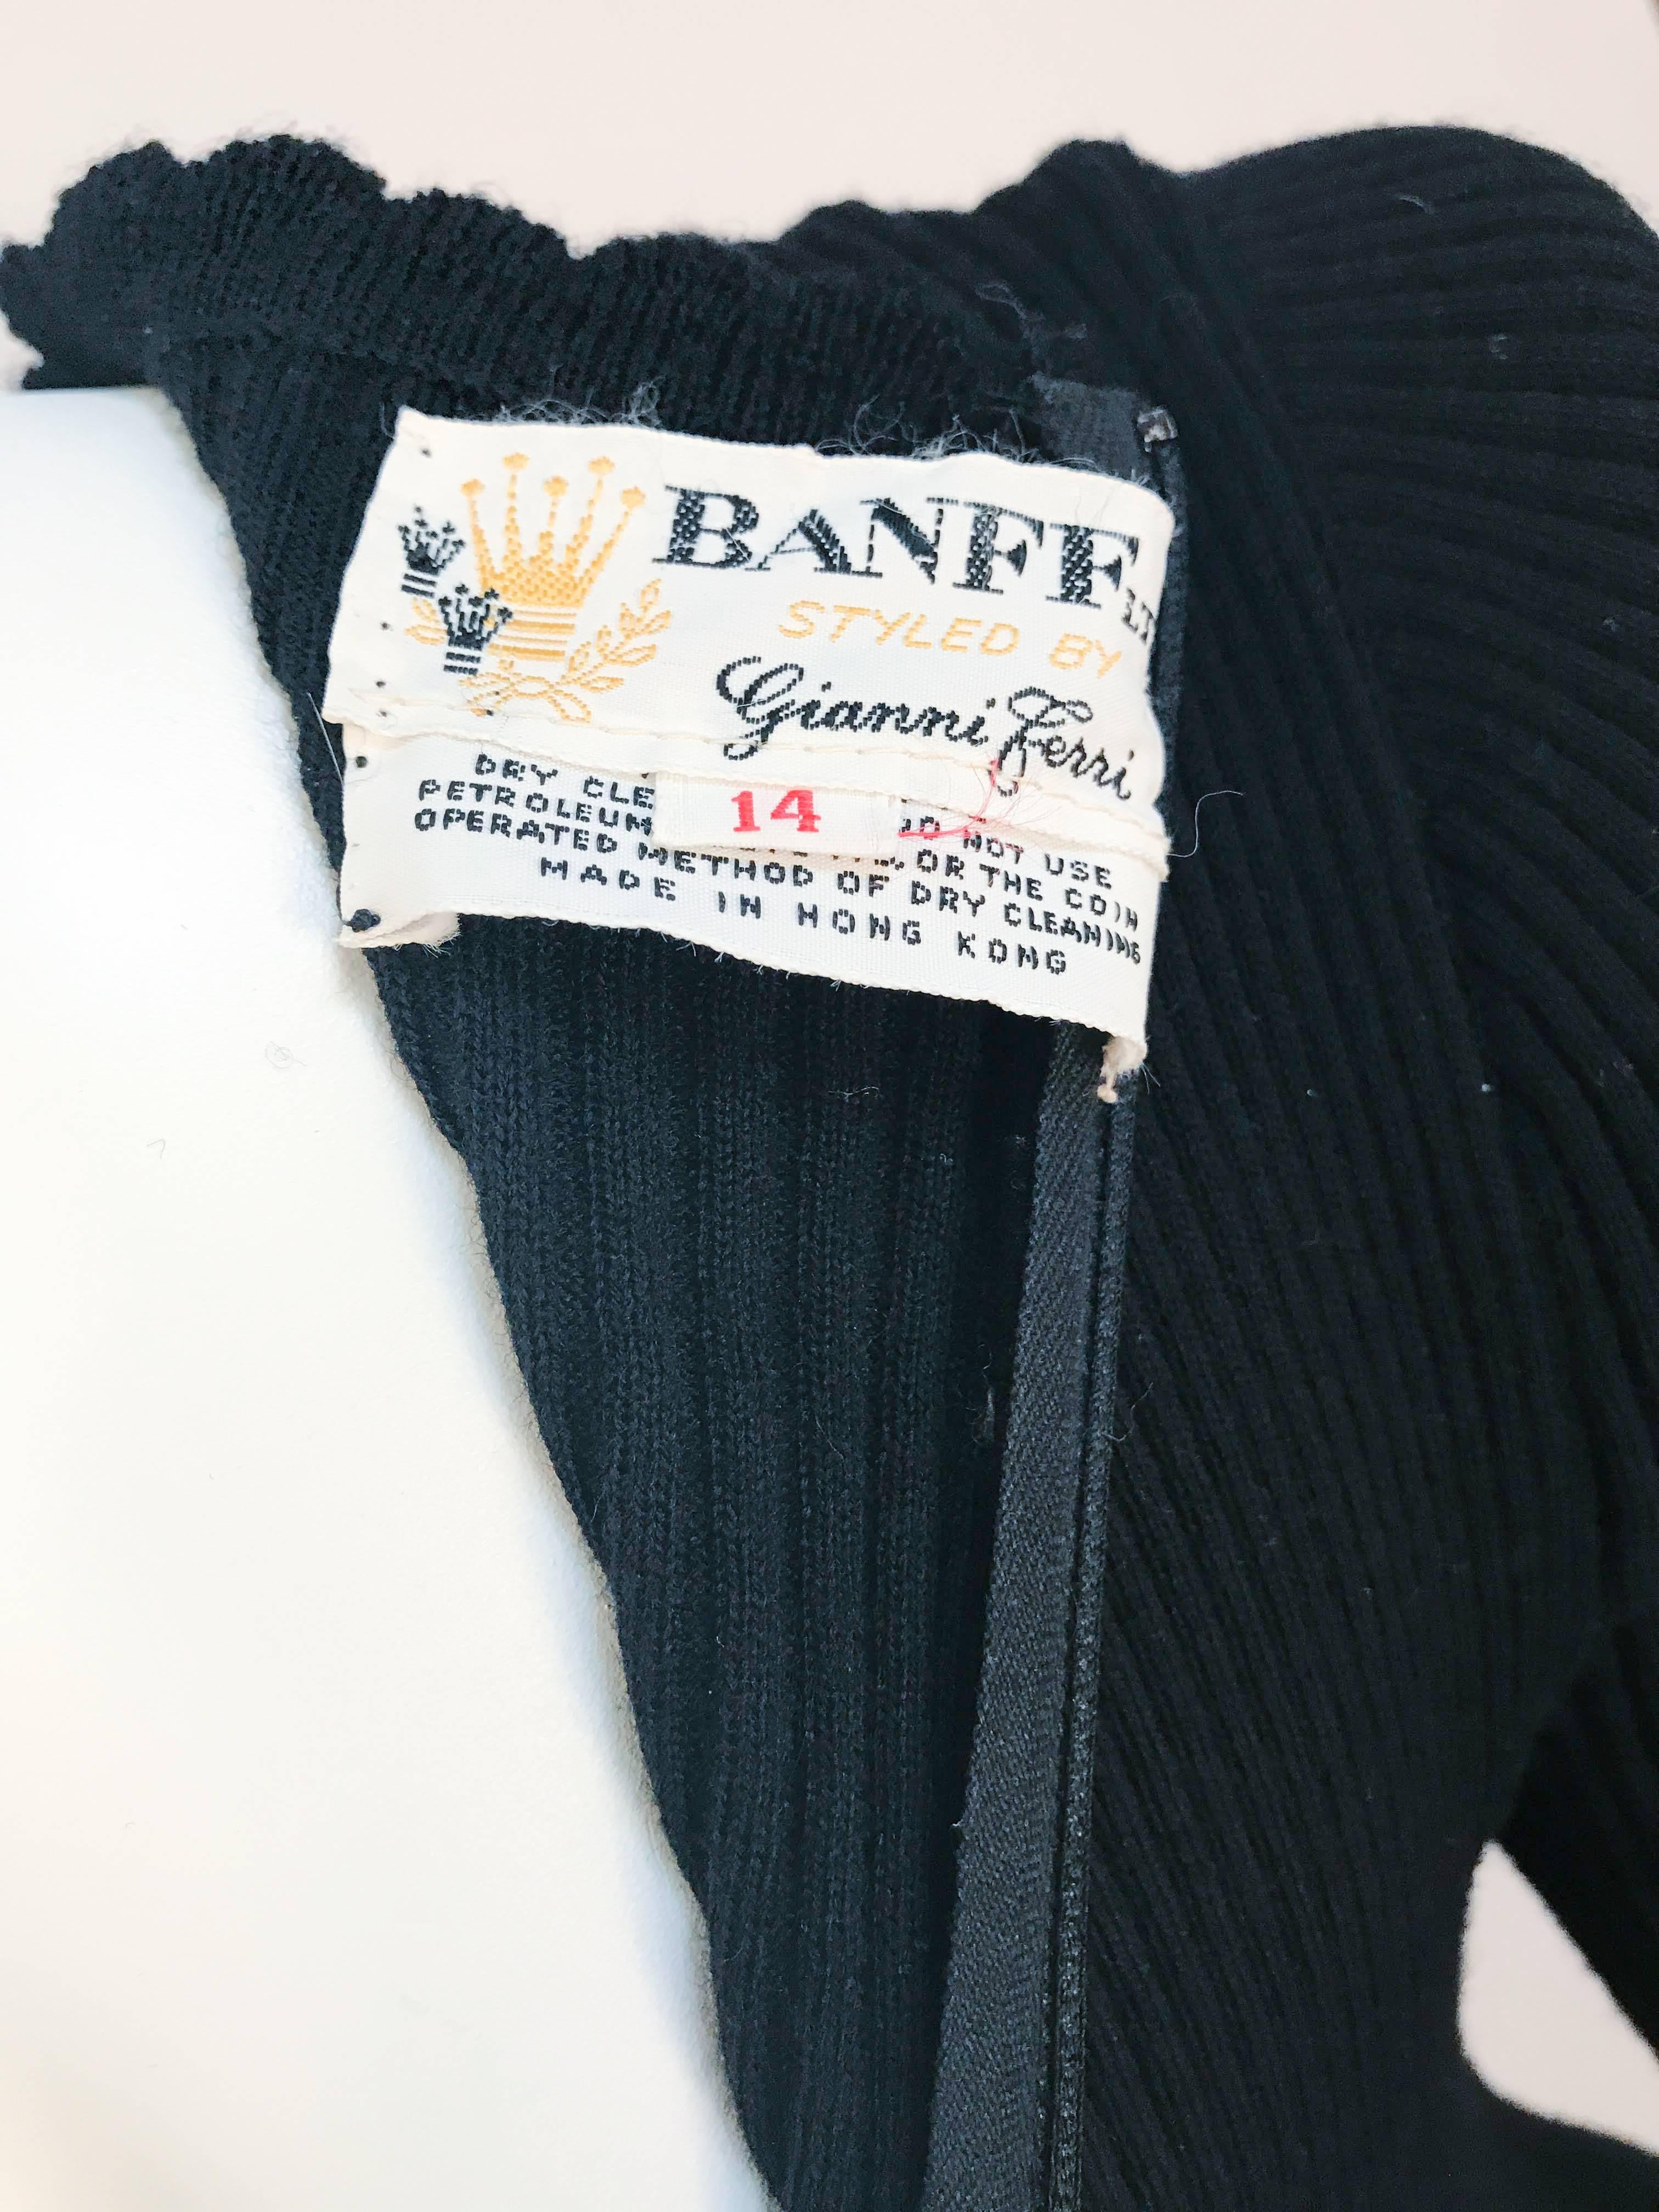 1970s Banff LTD by Gianni Ferri Black Knit Ruffled Dress 3